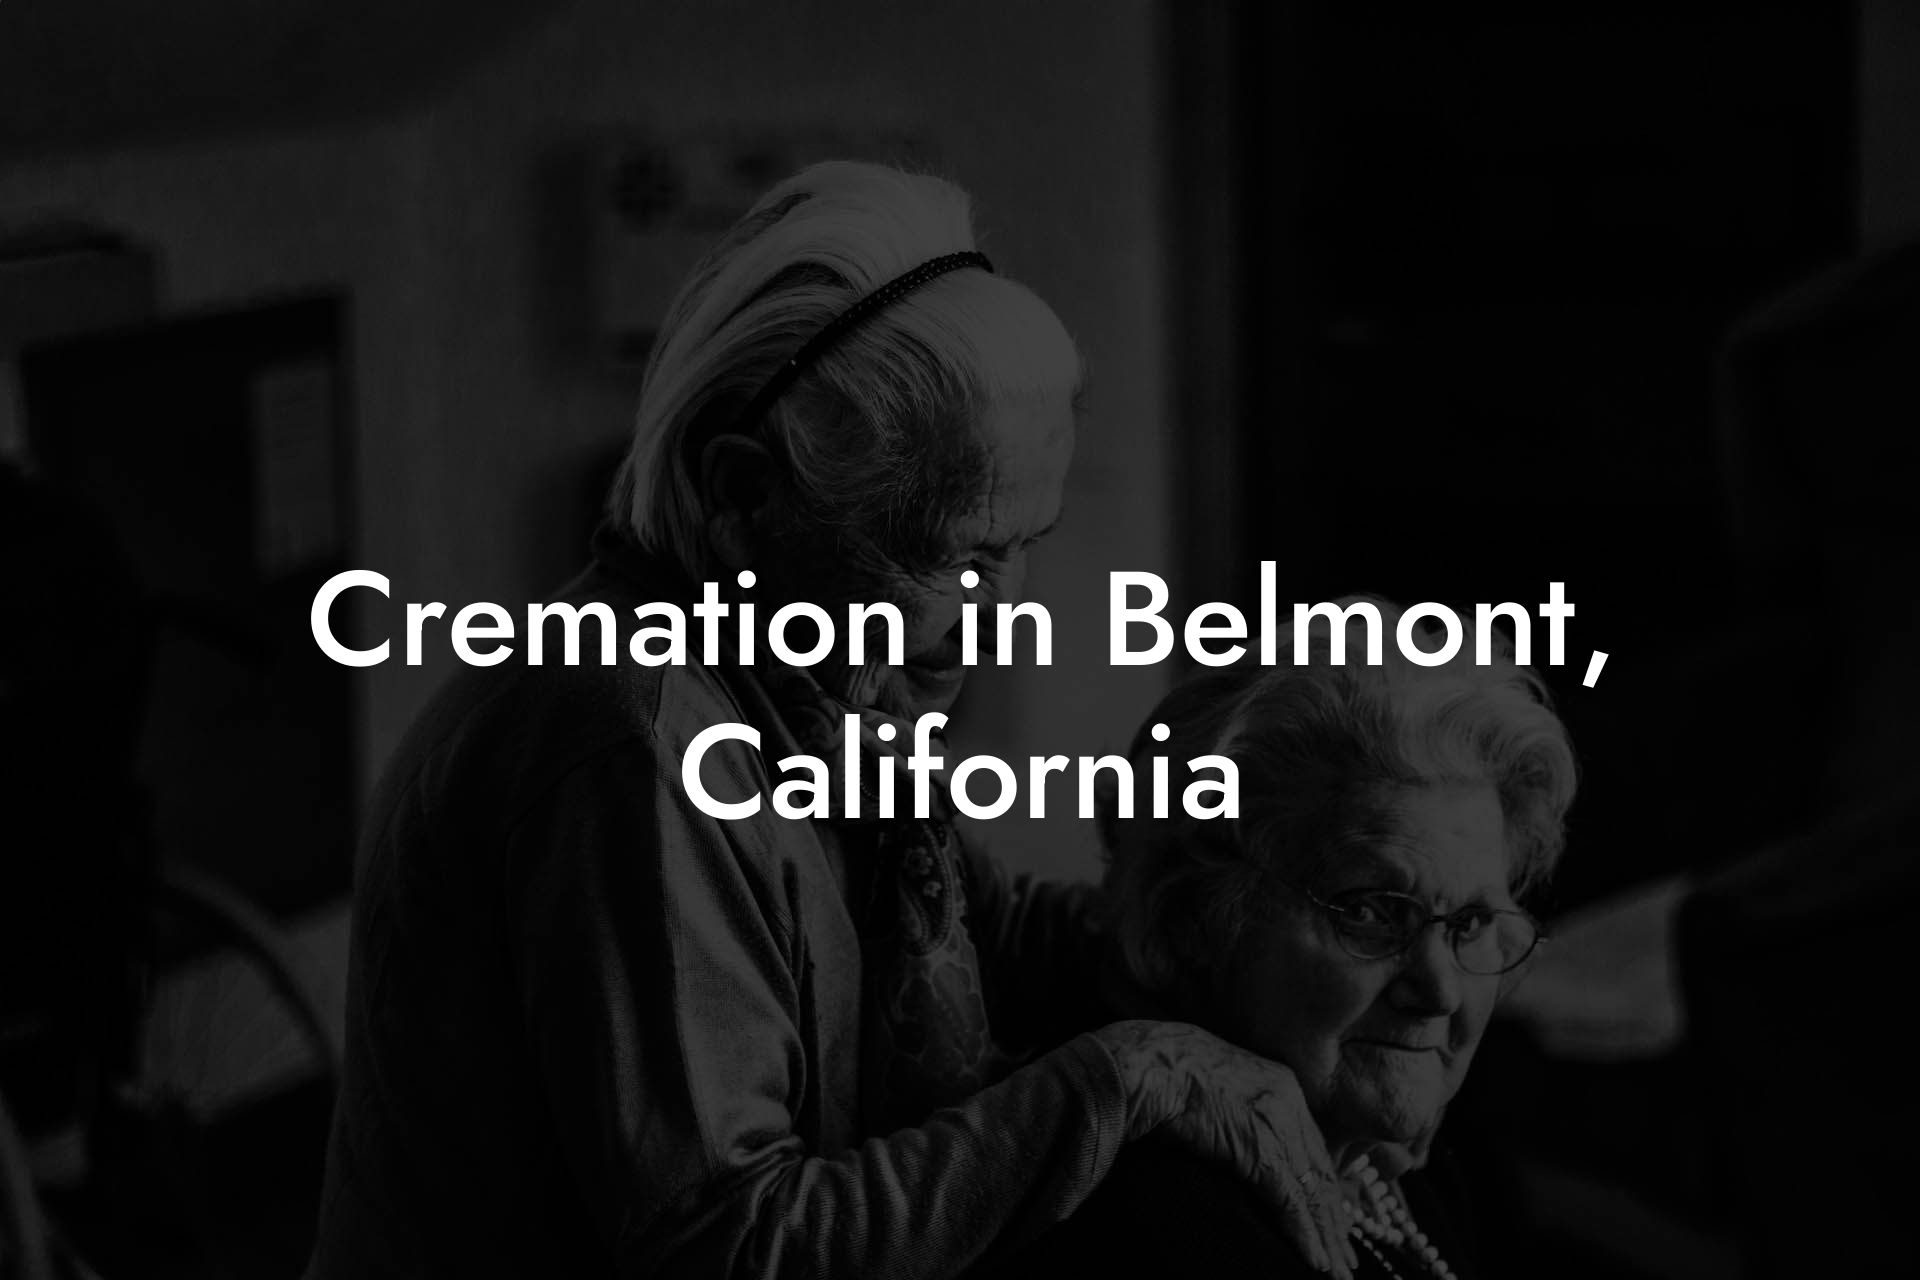 Cremation in Belmont, California